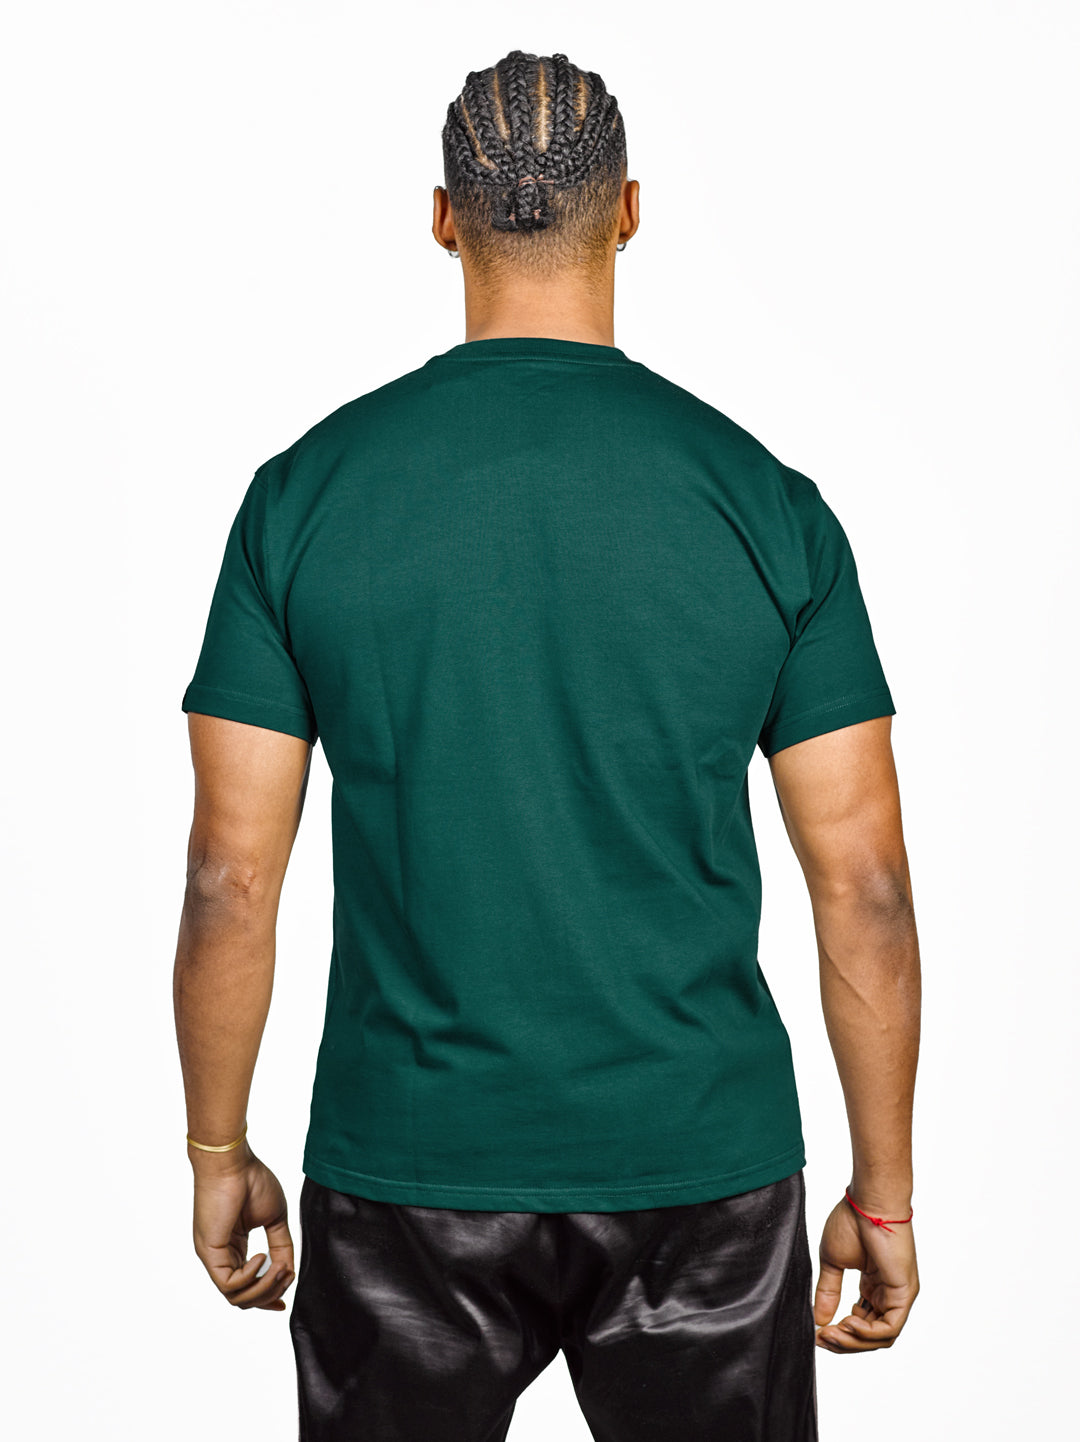 Exetees Plain Regular Round Neck T-Shirt - Emerald Green